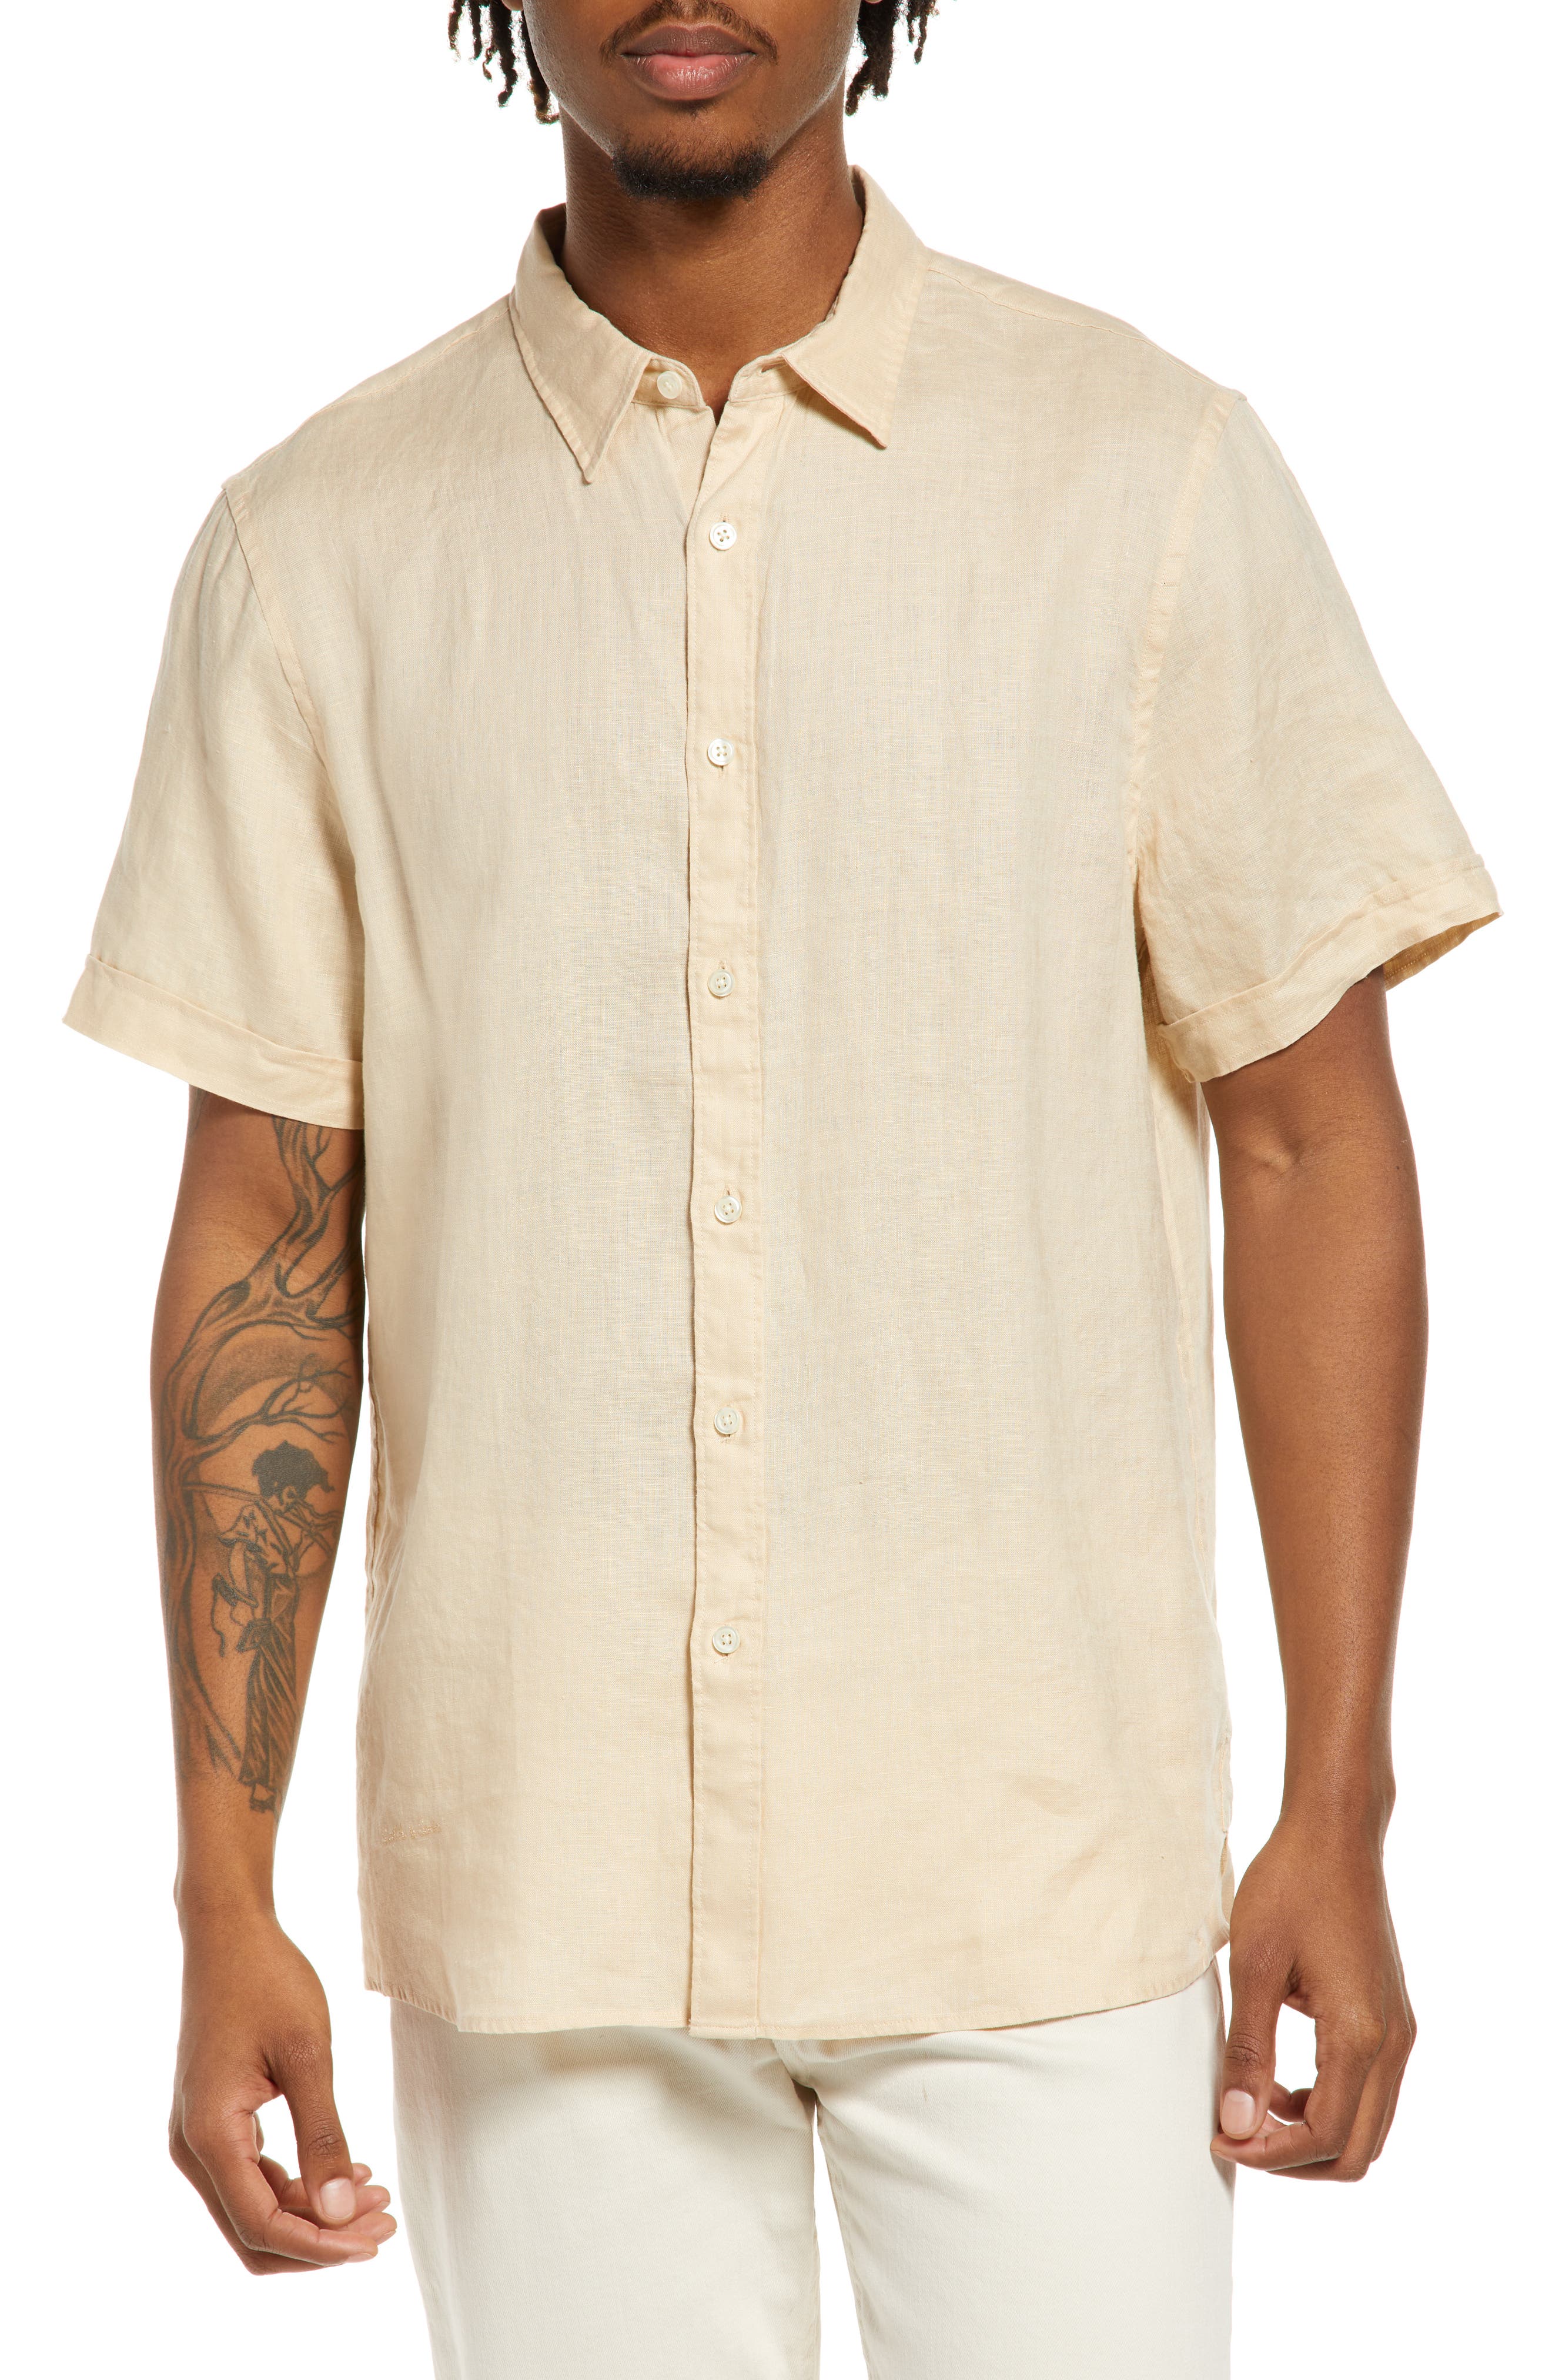 Mens Shirt Tops Summer Baggy Solid Cotton Linen Short Sleeve Button Plus Size Shirt Tops Blouse Men